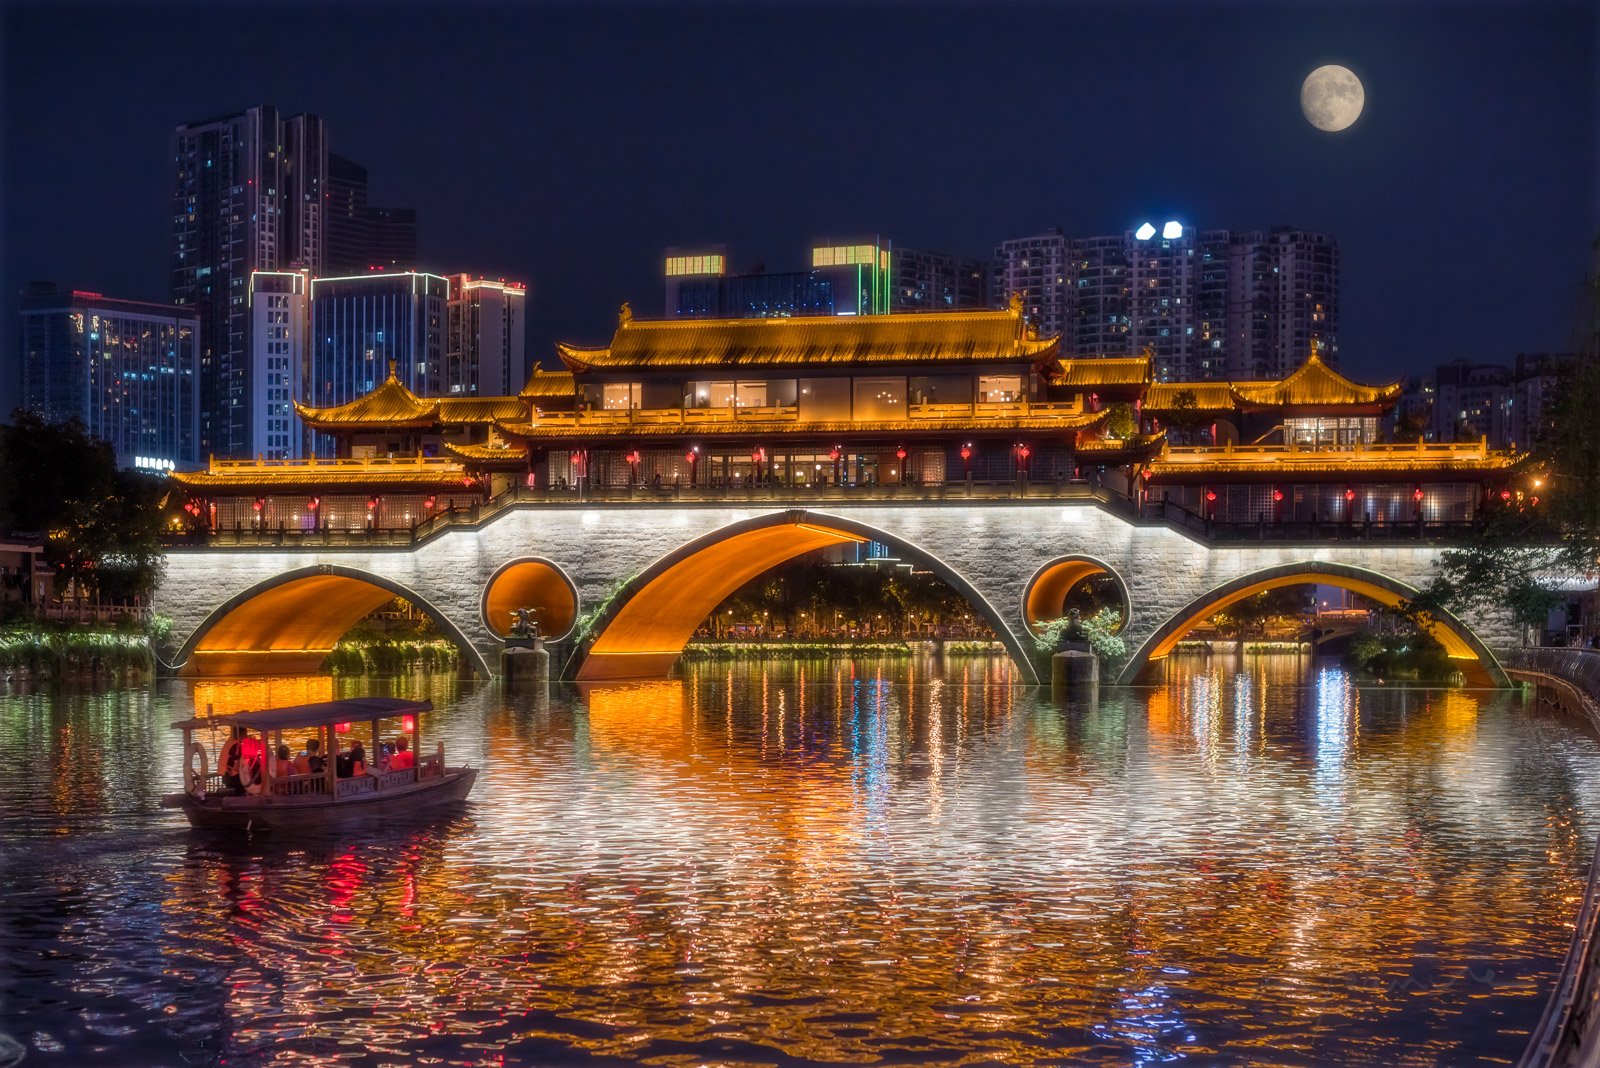 Blog – Chengdu Anshun bridge at night for the mid-autumn moon festival